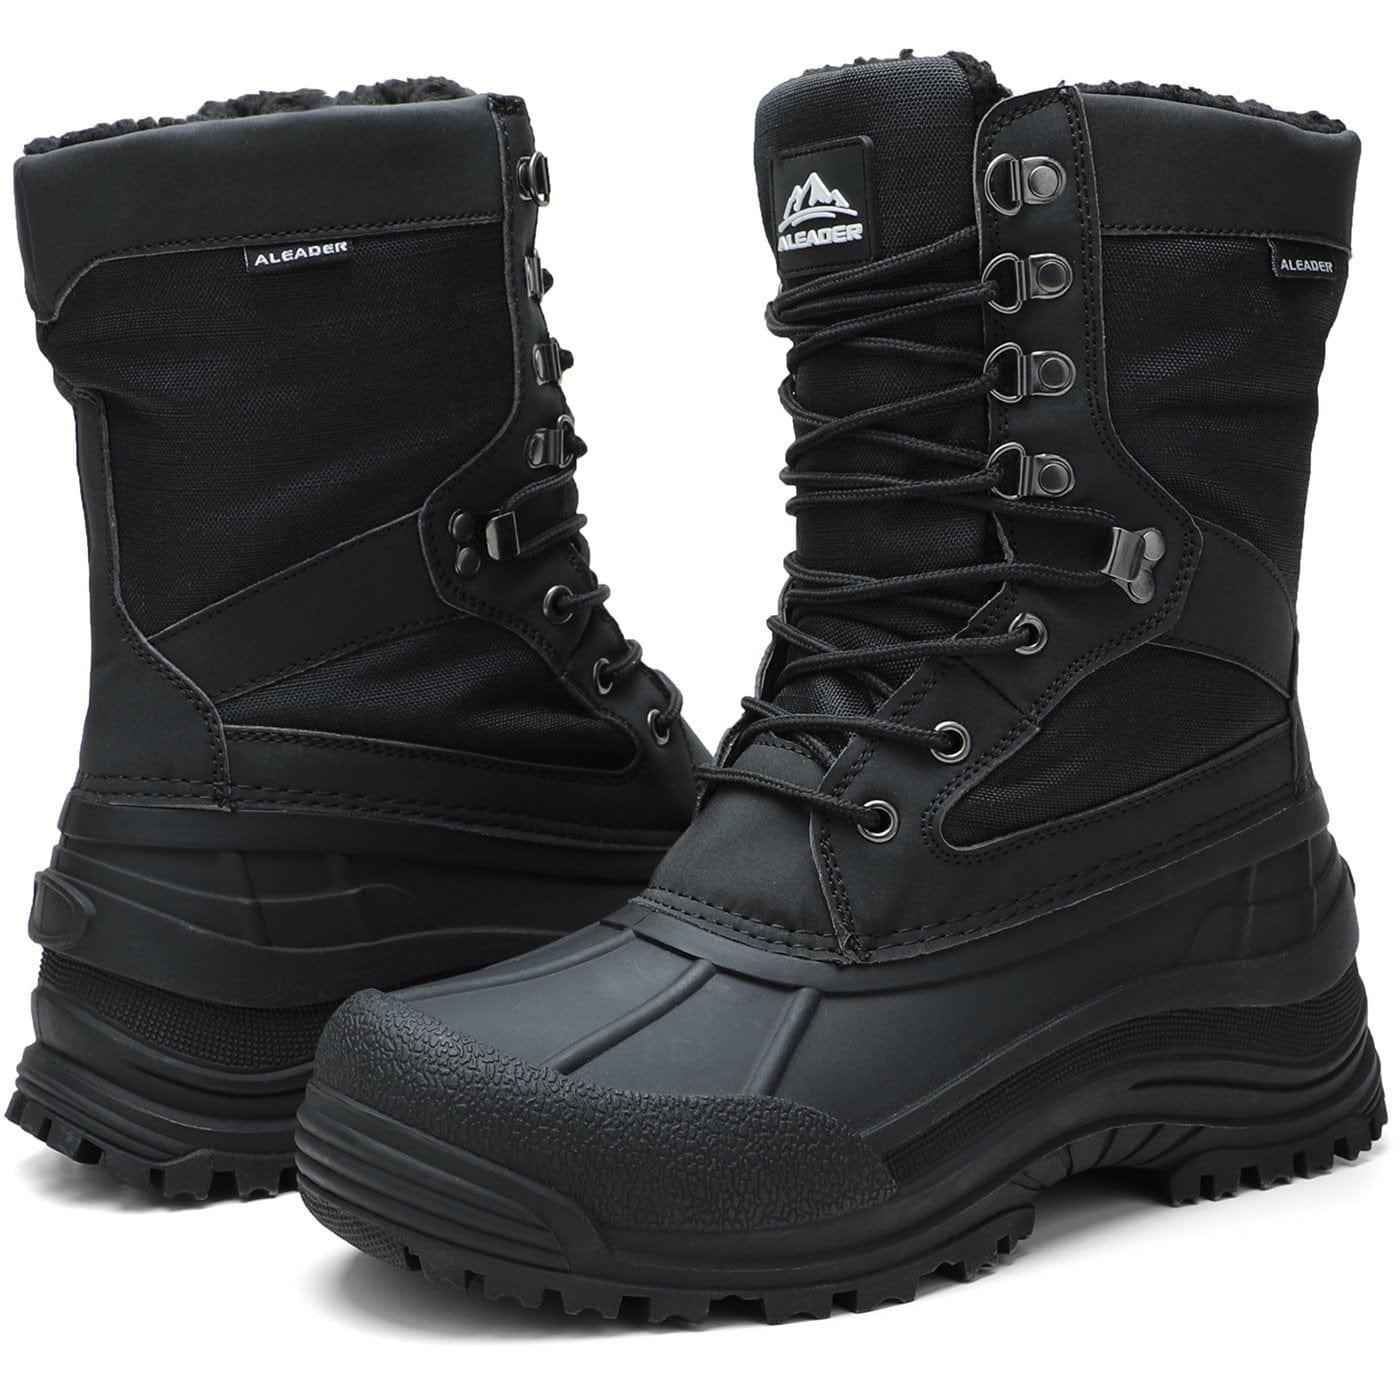 Aleader 7 / BLACK/PU Aleader Men’s Lace up Insulated Waterproof Winter Snow Boots - Black/Pu